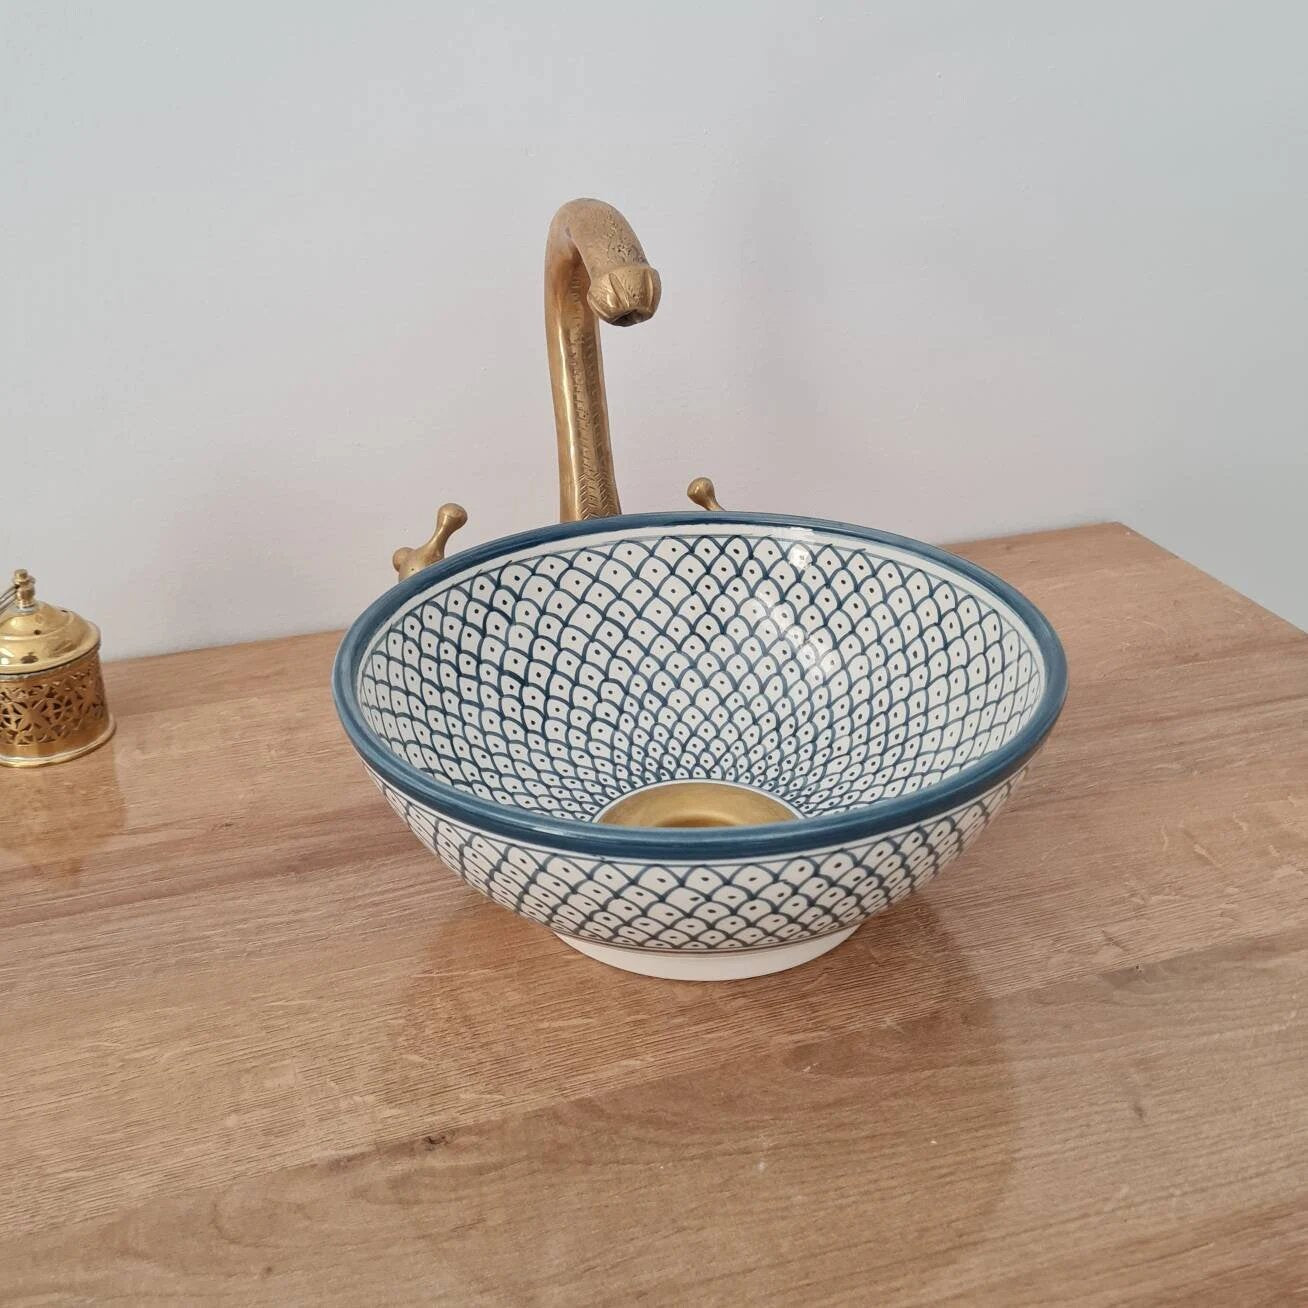 Moroccan sink | moroccan ceramic sink | bathroom sink | moroccan bathroom basin | moroccan sink bowl | Blue sink bowl #29